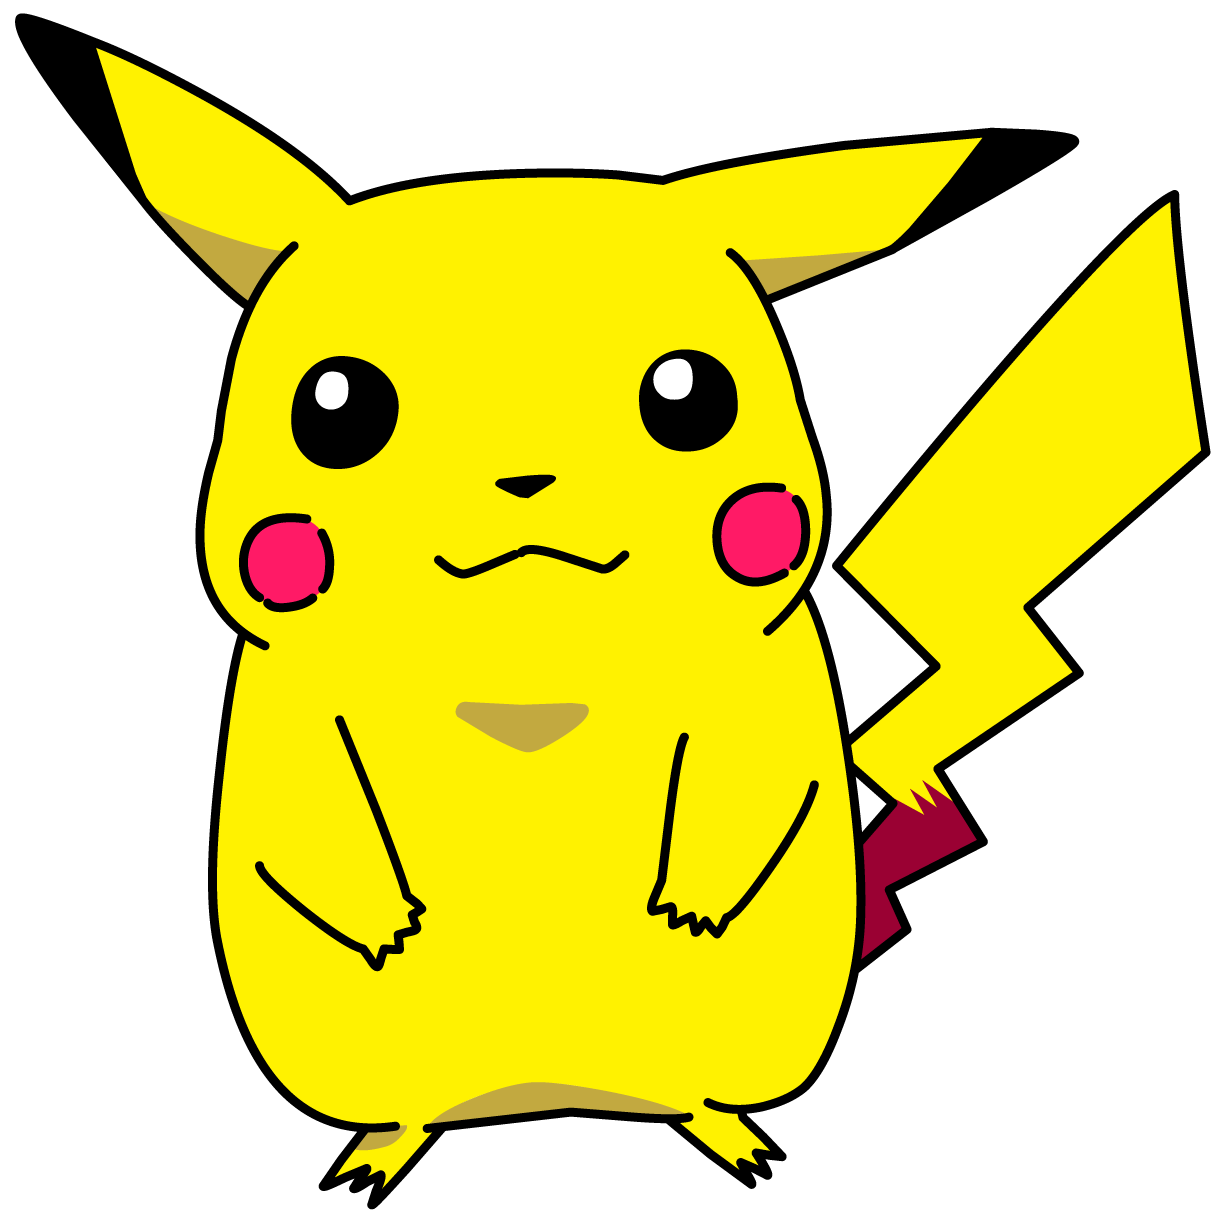 Pikachu - The Pokemon Wiki